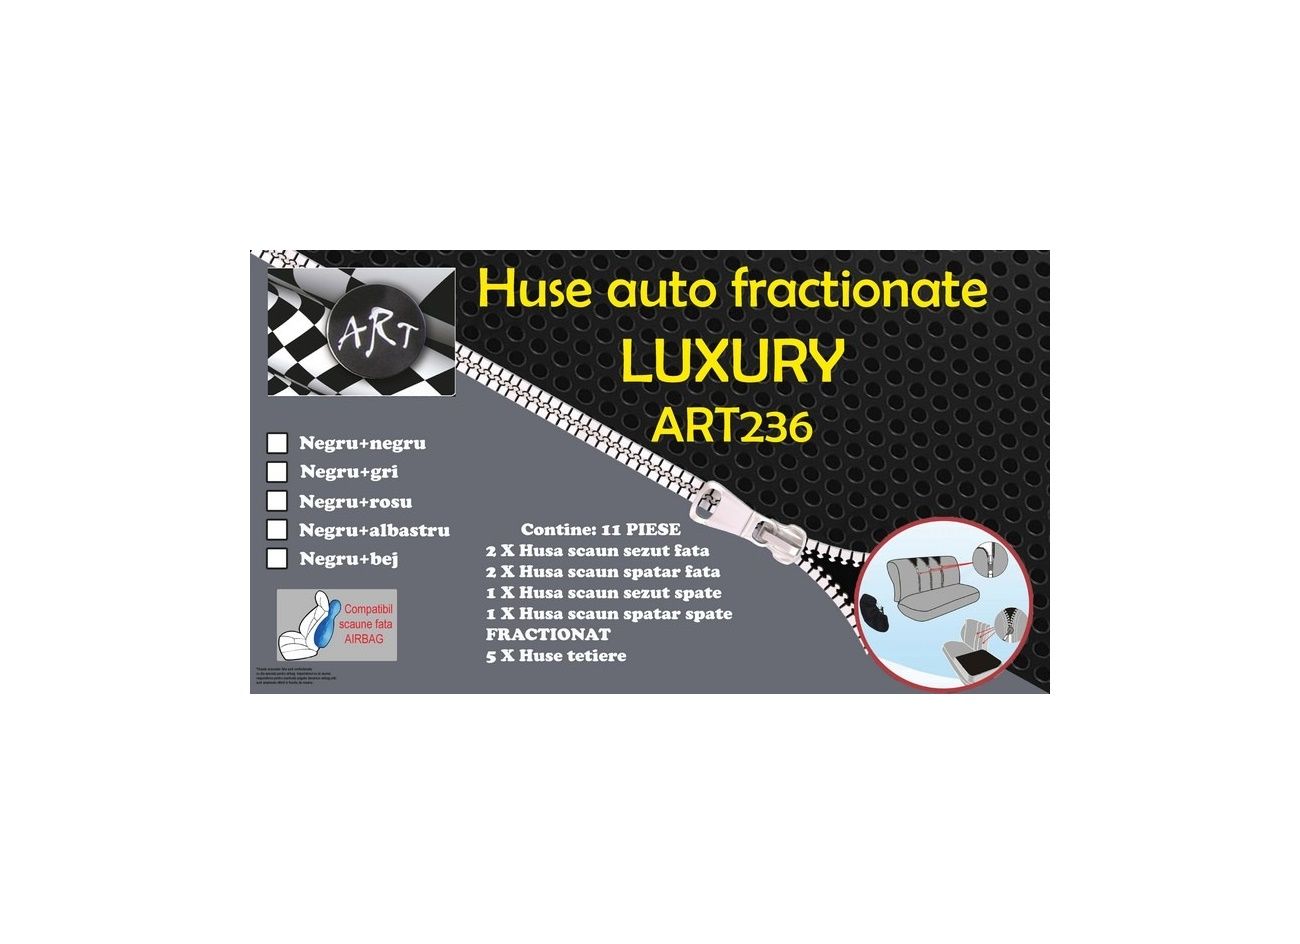 Huse auto fractionate LUXURY ERK